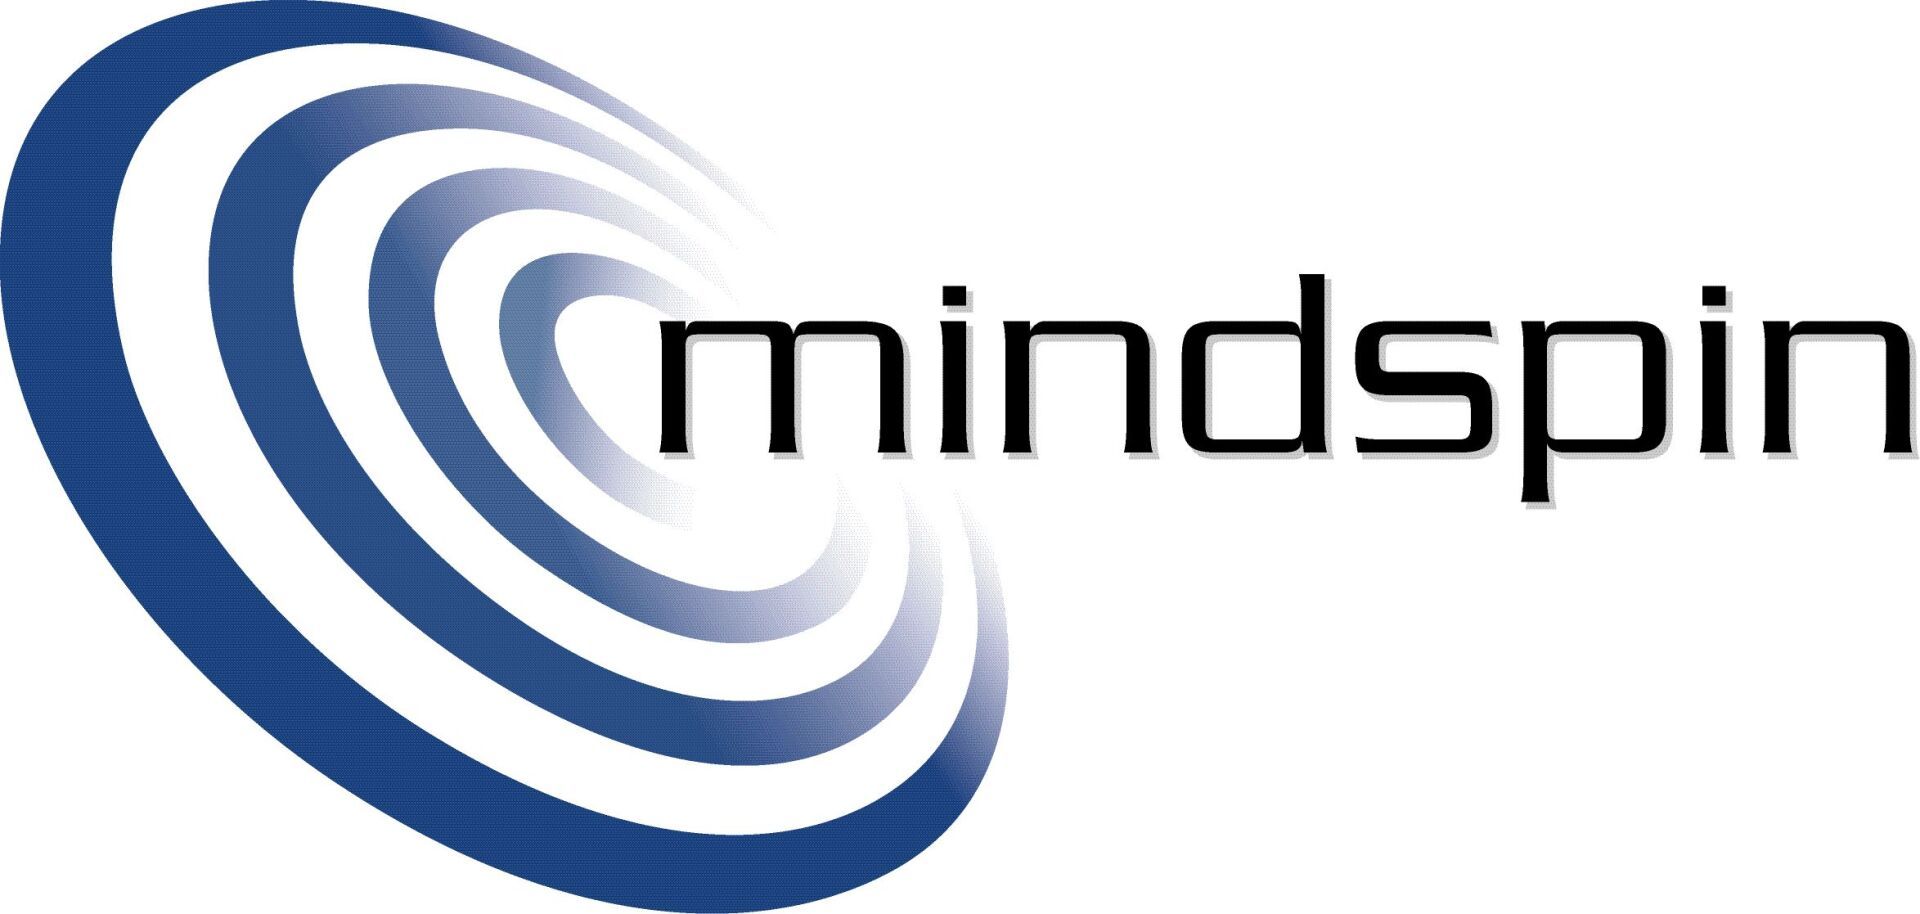 Logo mindspin. Kommunikationsberatung